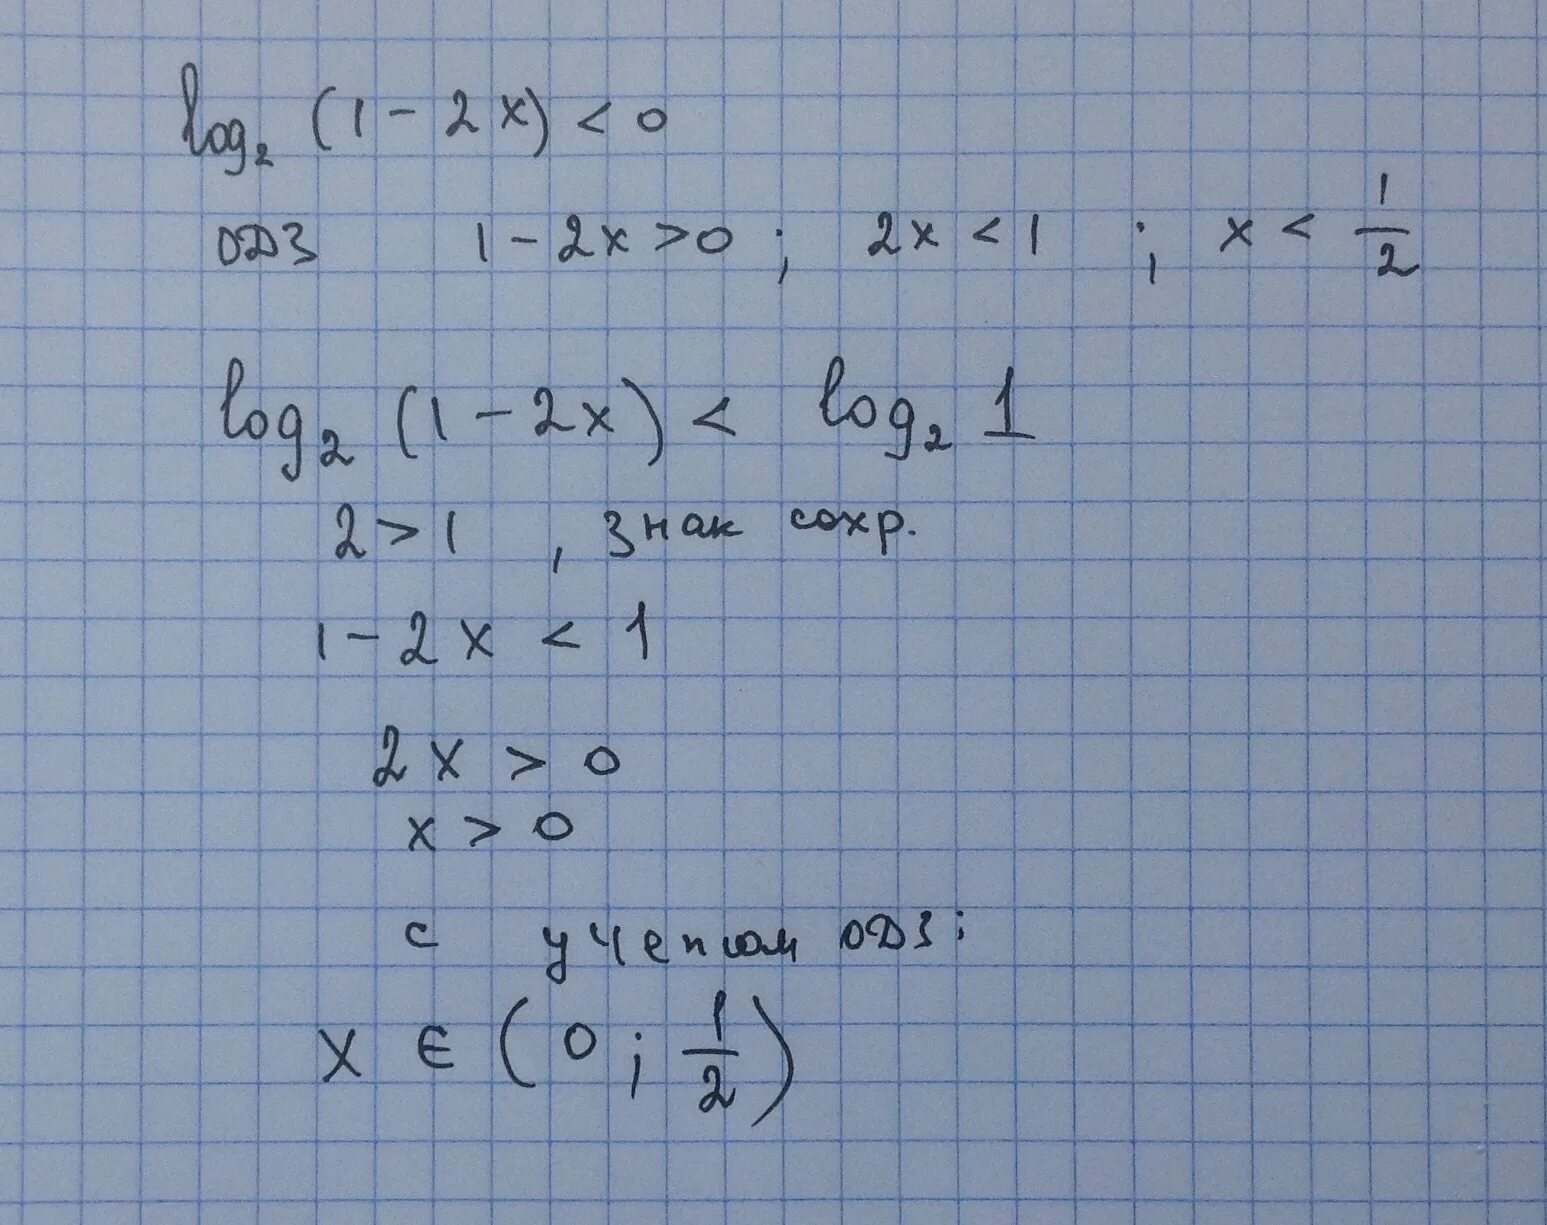 Неравенства log2 x 0. Множество решений неравенства x > 0. Найдите множество натуральных решений неравенства. Множество решений неравенства log0,8(x+8)-log0.8(2-2x)>=0. Найдите множество решений неравенства 5x + 2.